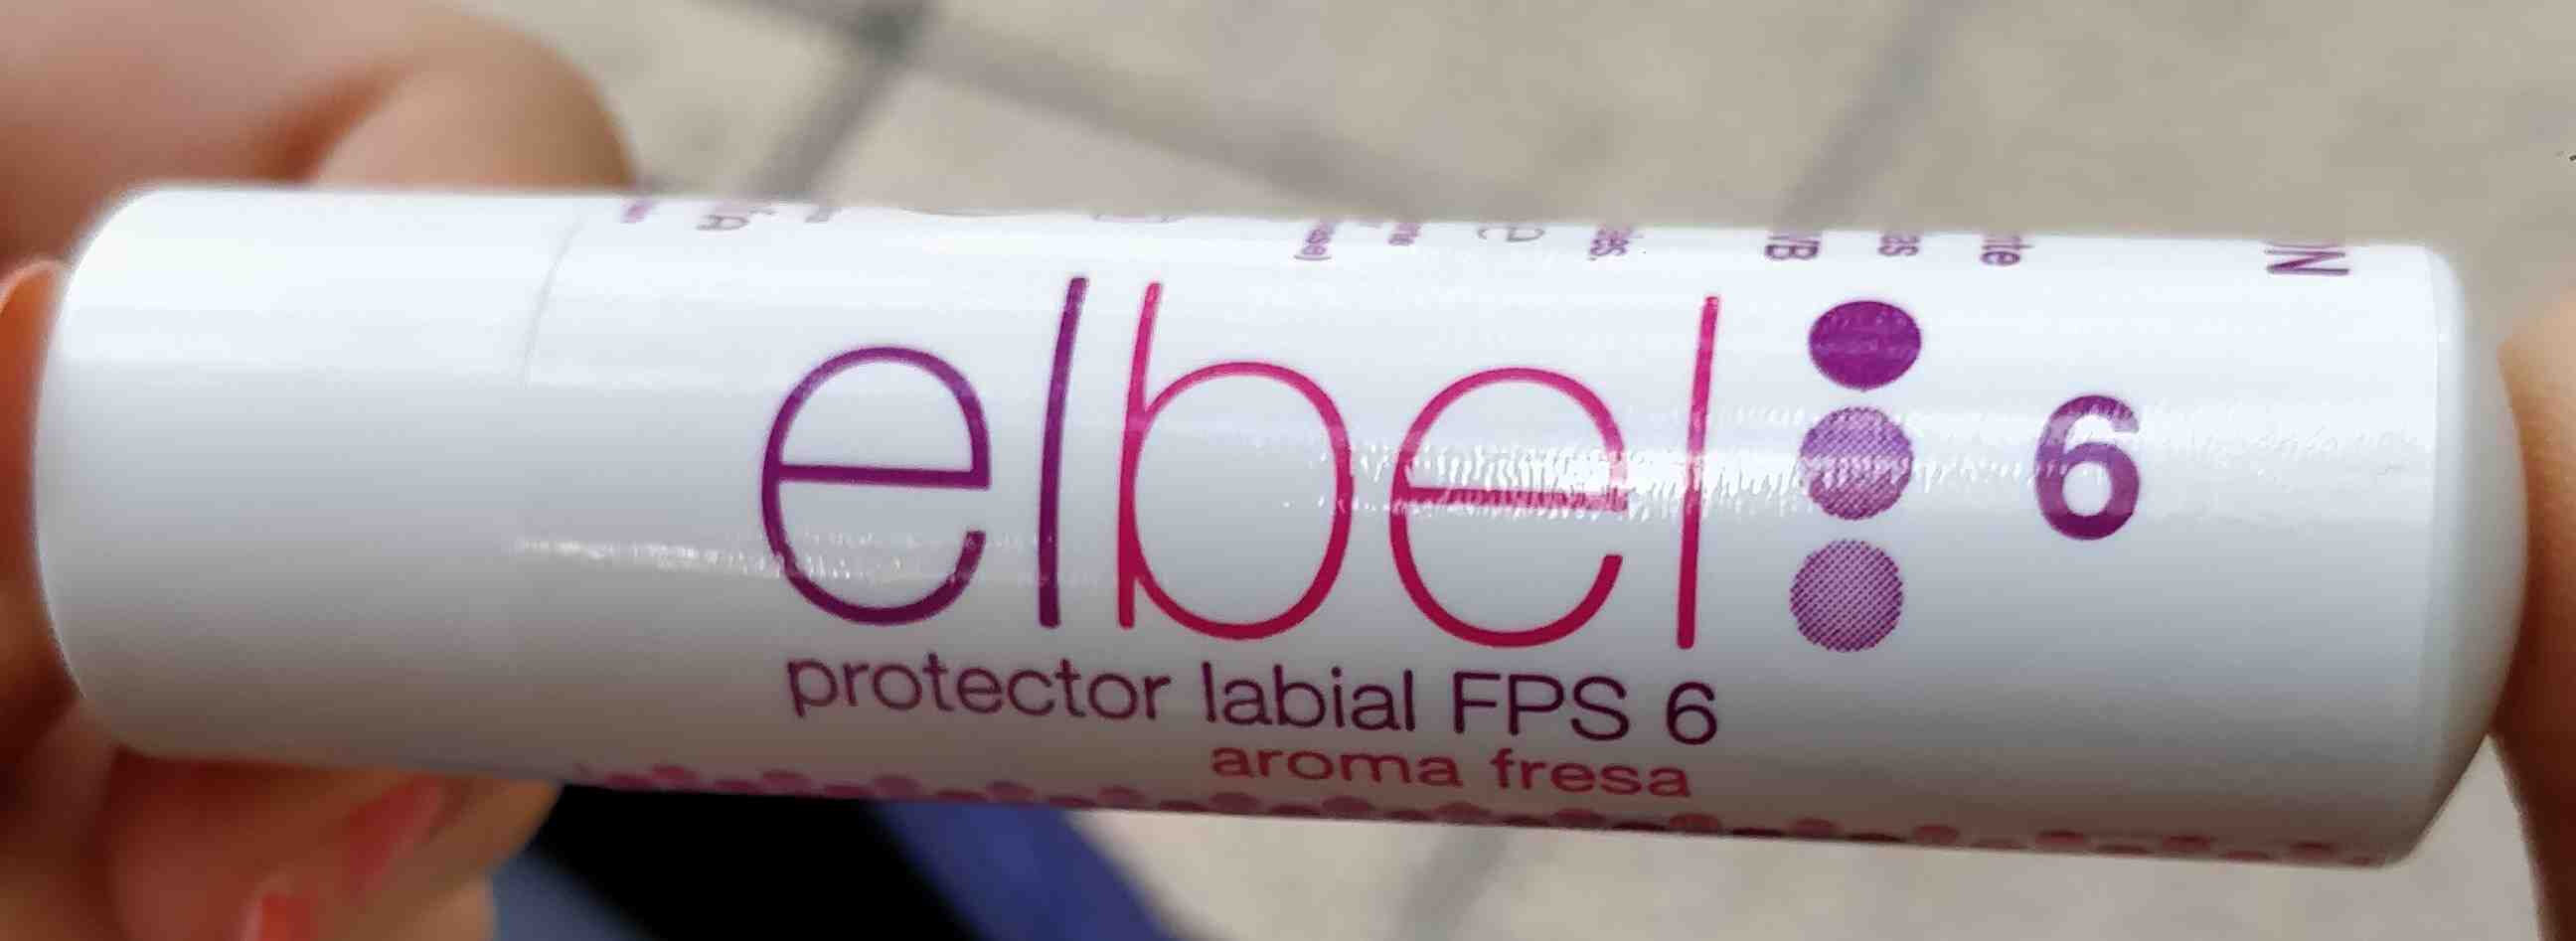 Protector labial FPS 6 aroma fresa - Producto - en